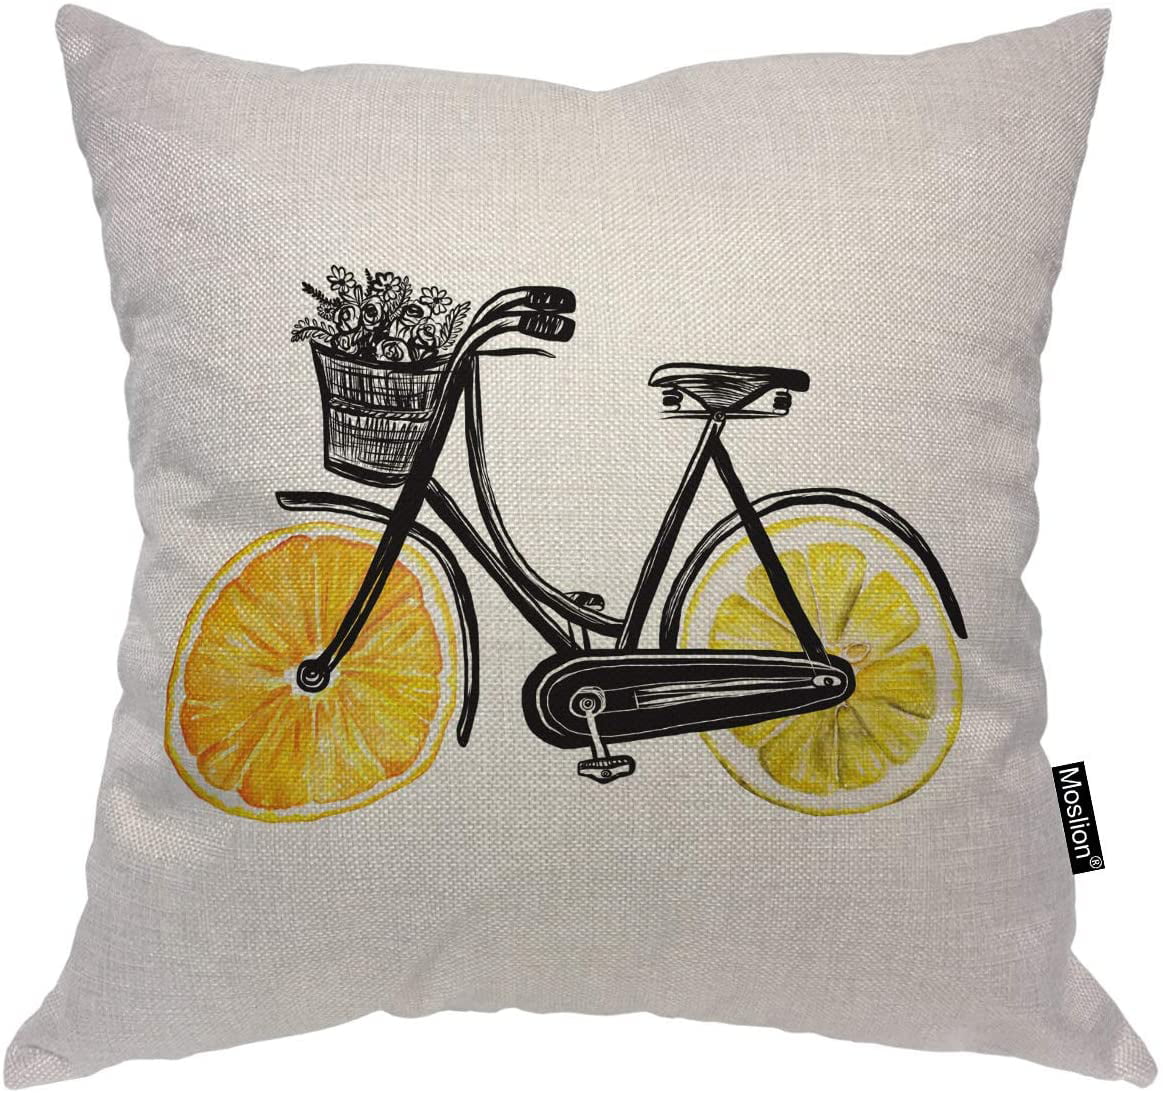 Vintage Bicycle Pillow Case Cotton Linen Throw Waist Cushion Cover Home Decor18" 